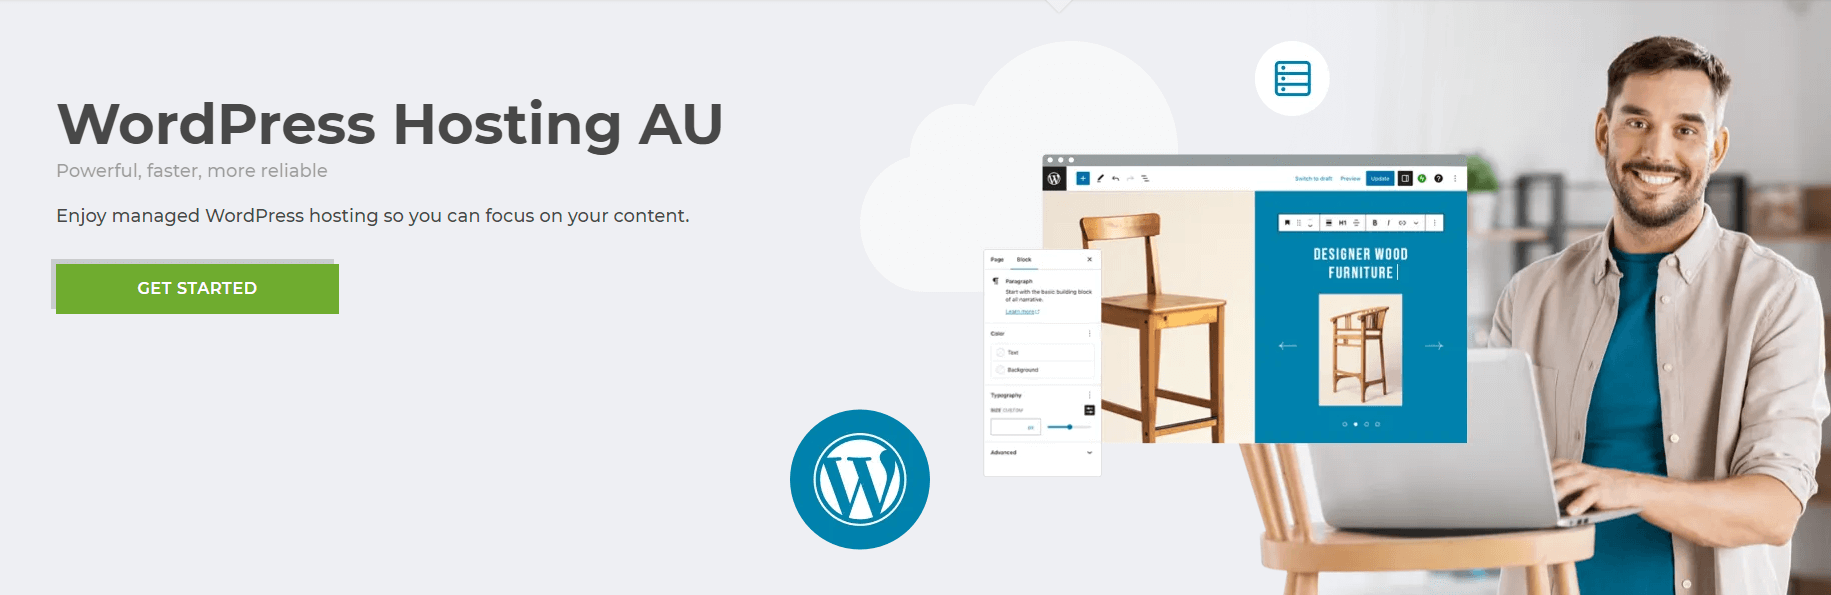 CrazyDomains cheap WordPress hosting Australia screenshot.